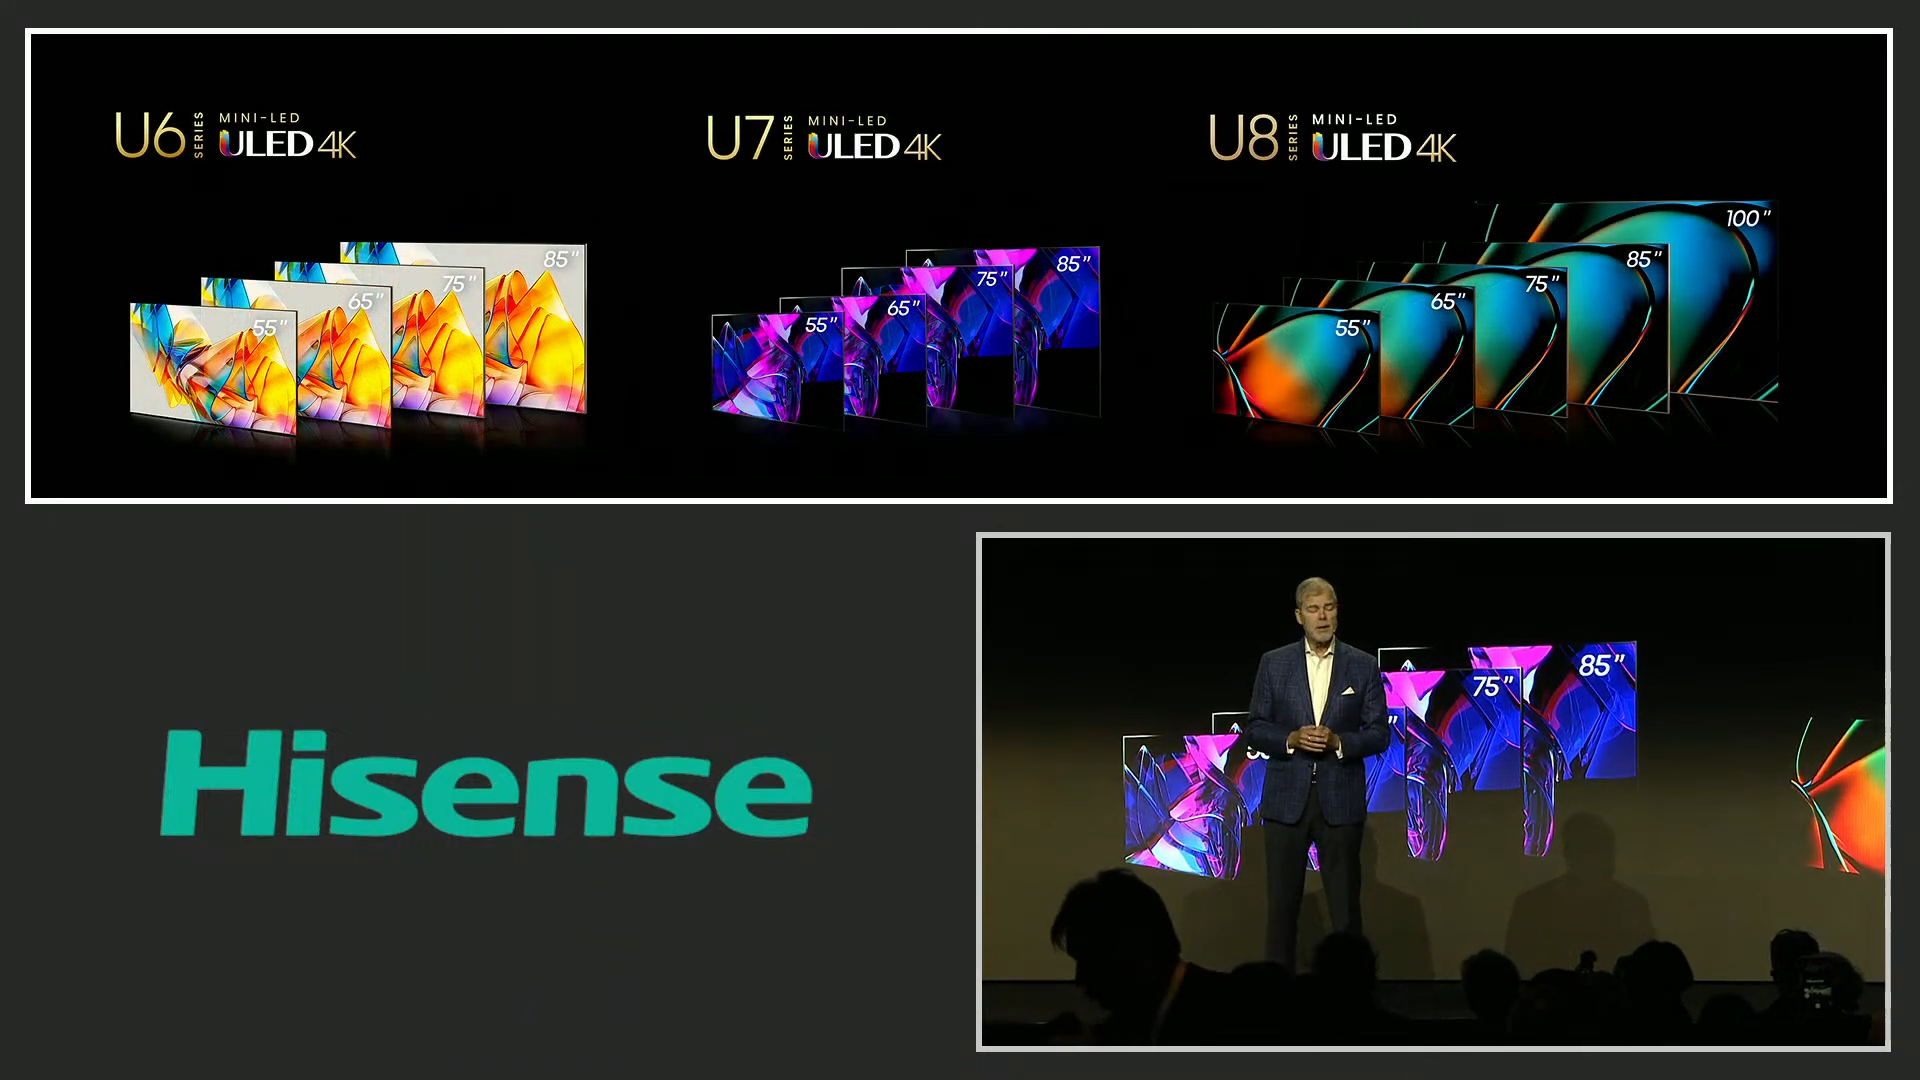 Hisense unveils new ULED and ULED X lineups